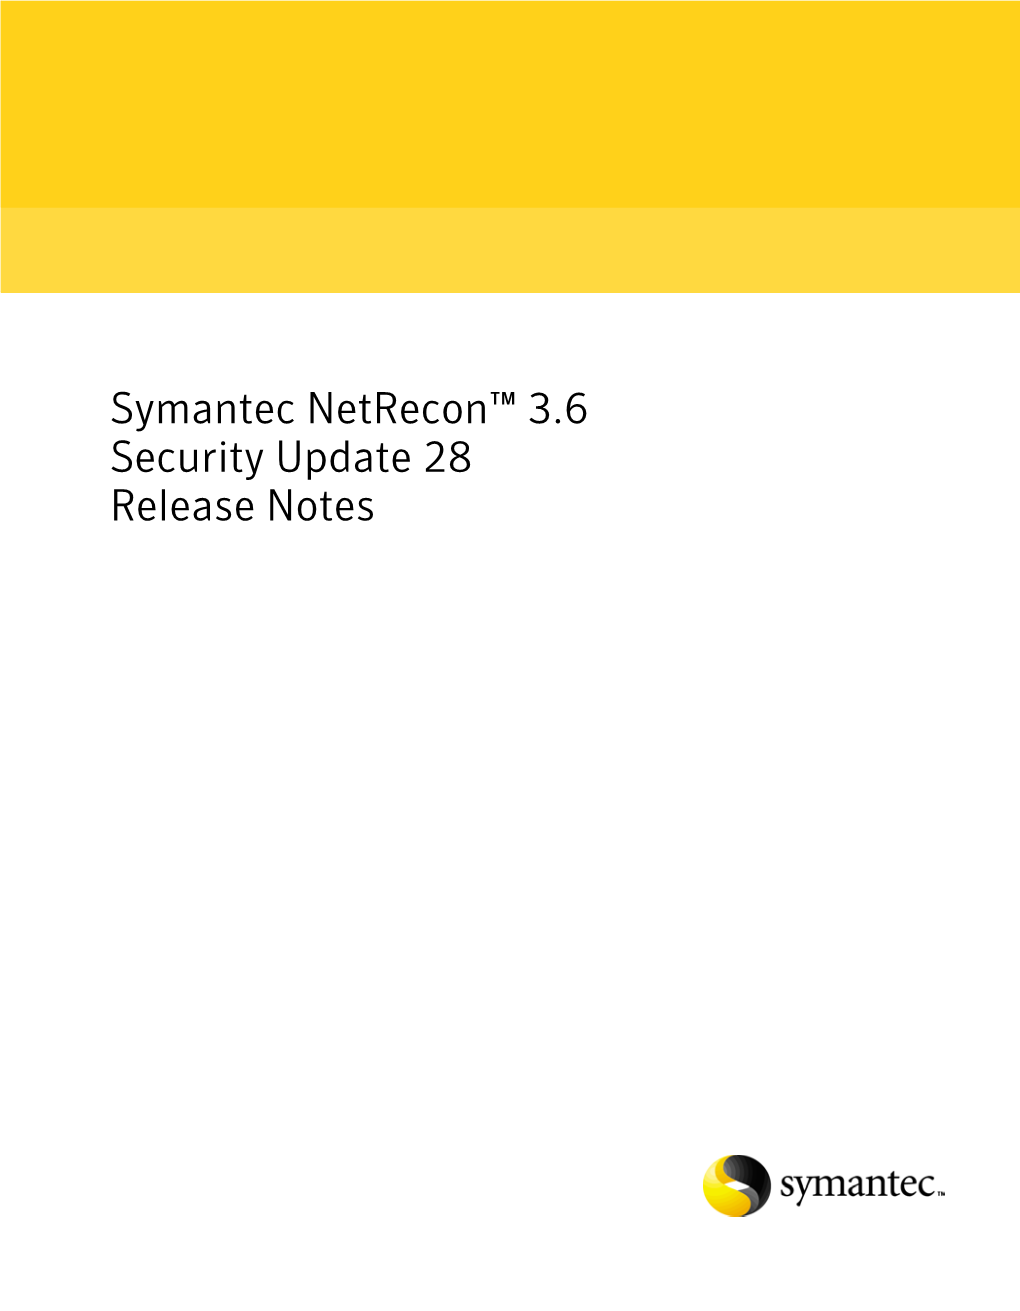 Symantec Netrecon™ 3.6 Security Update 28 Release Notes Symantec Netrecon Security Update 28 Release Notes